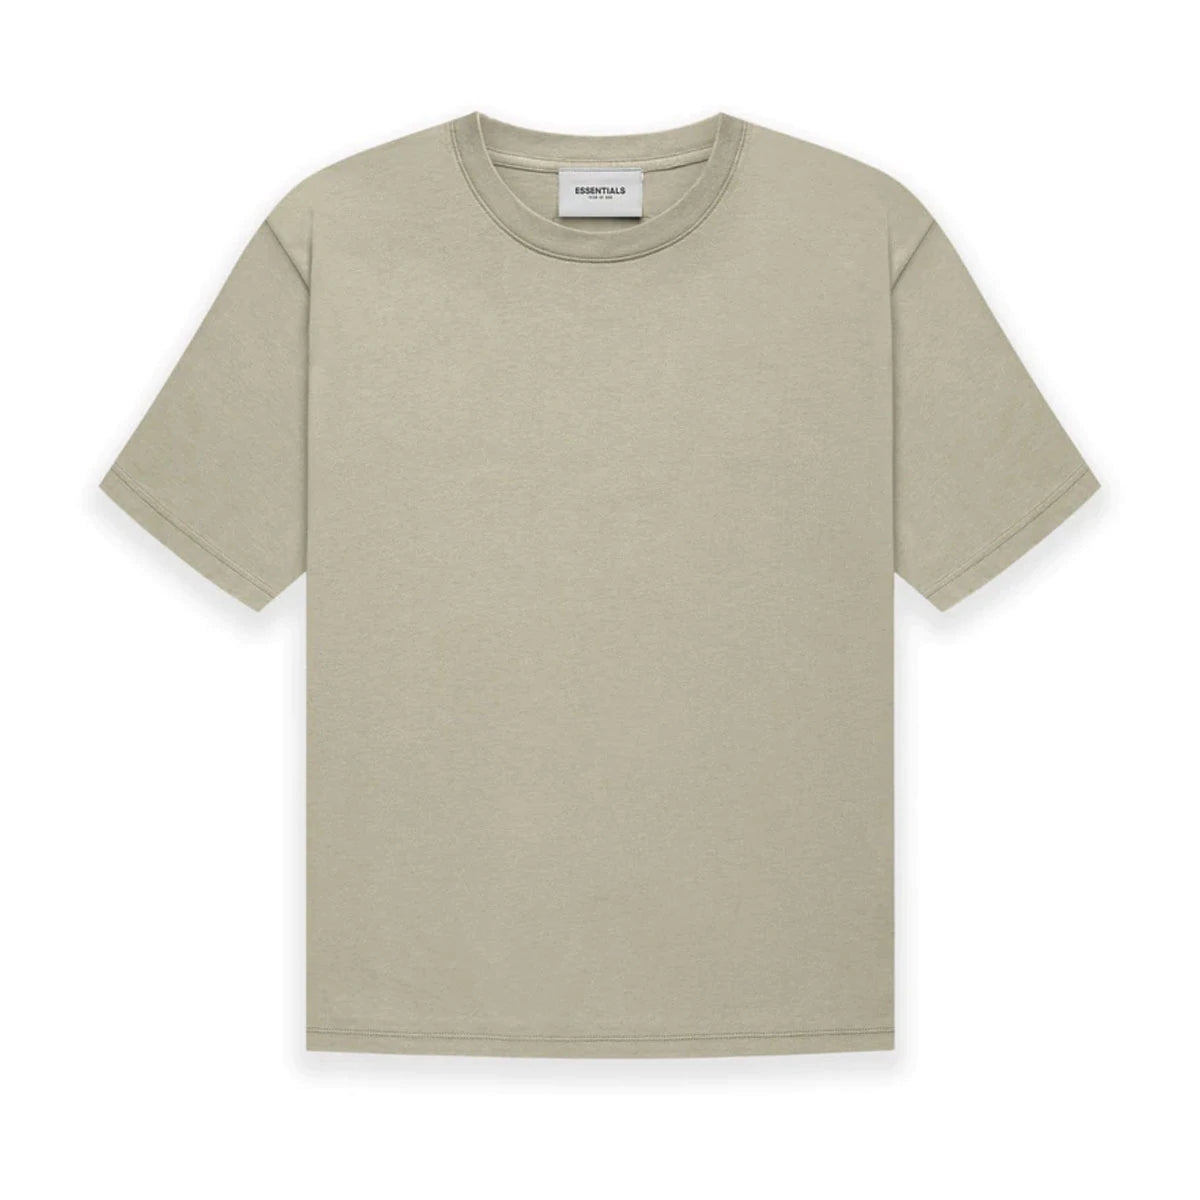 Fear of God Essentials T-Shirt - Pistachio (SS22) - Im Your Wardrobe